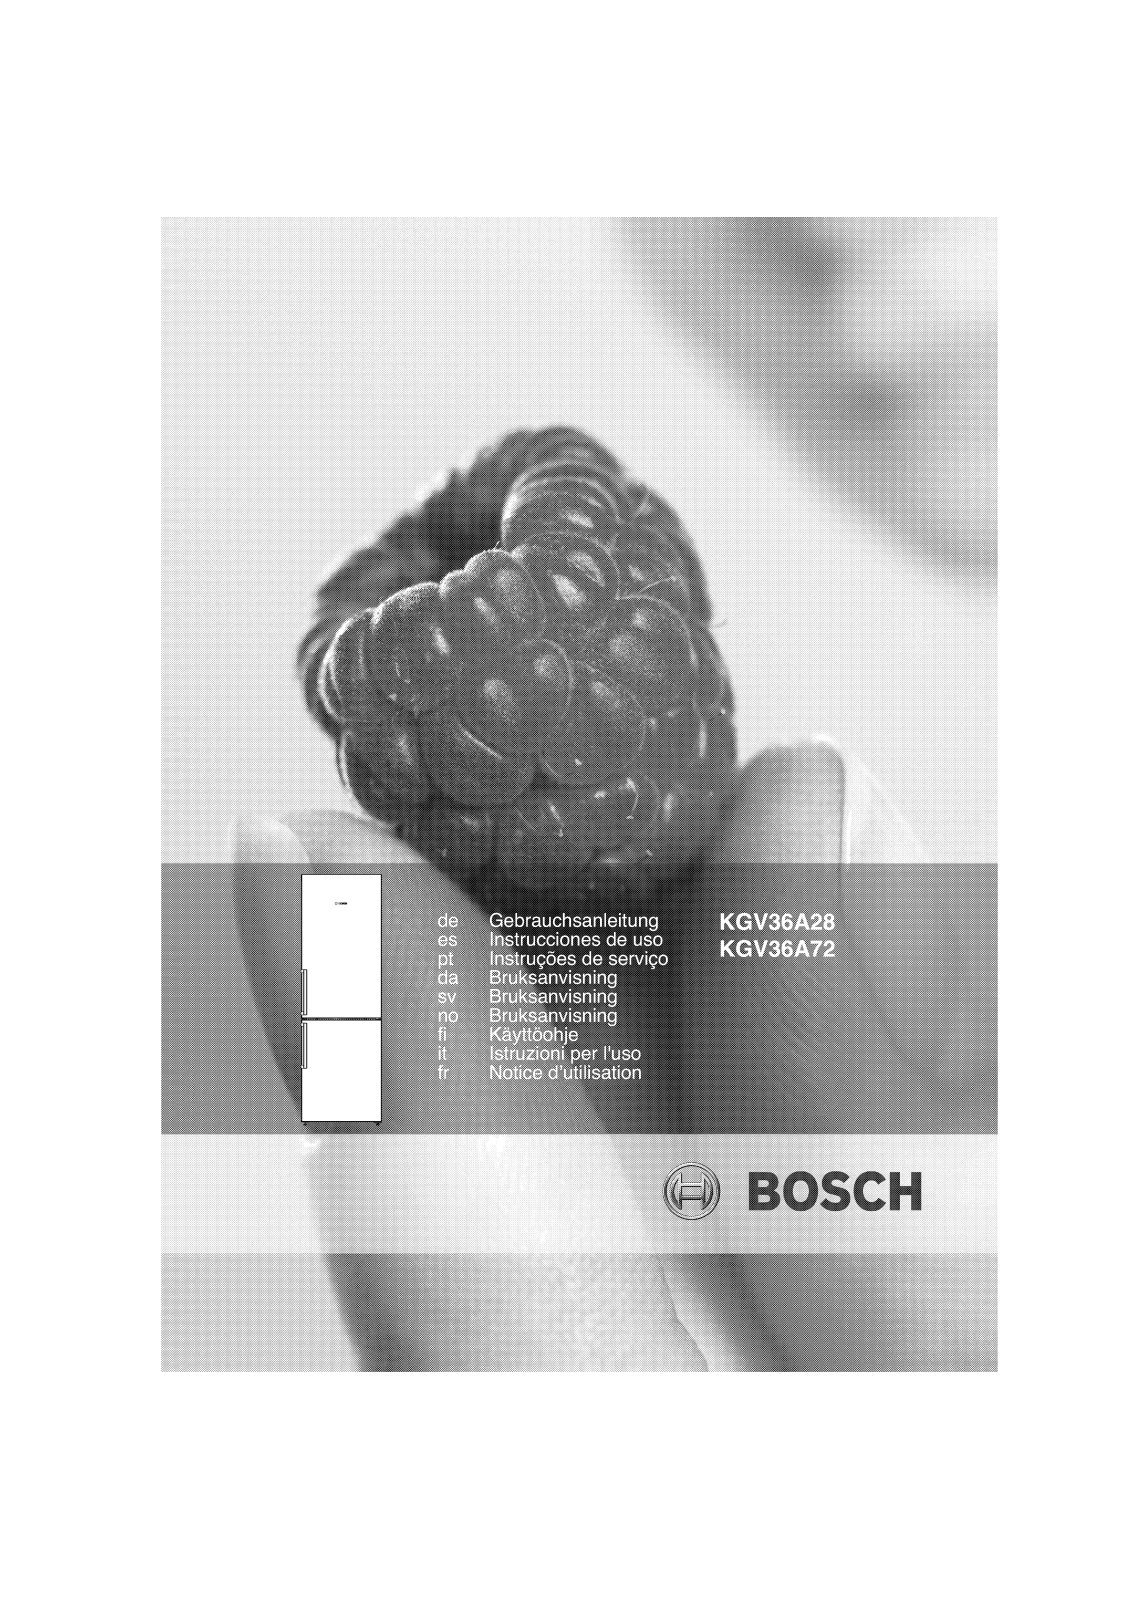 BOSCH KGV36A72 User Manual